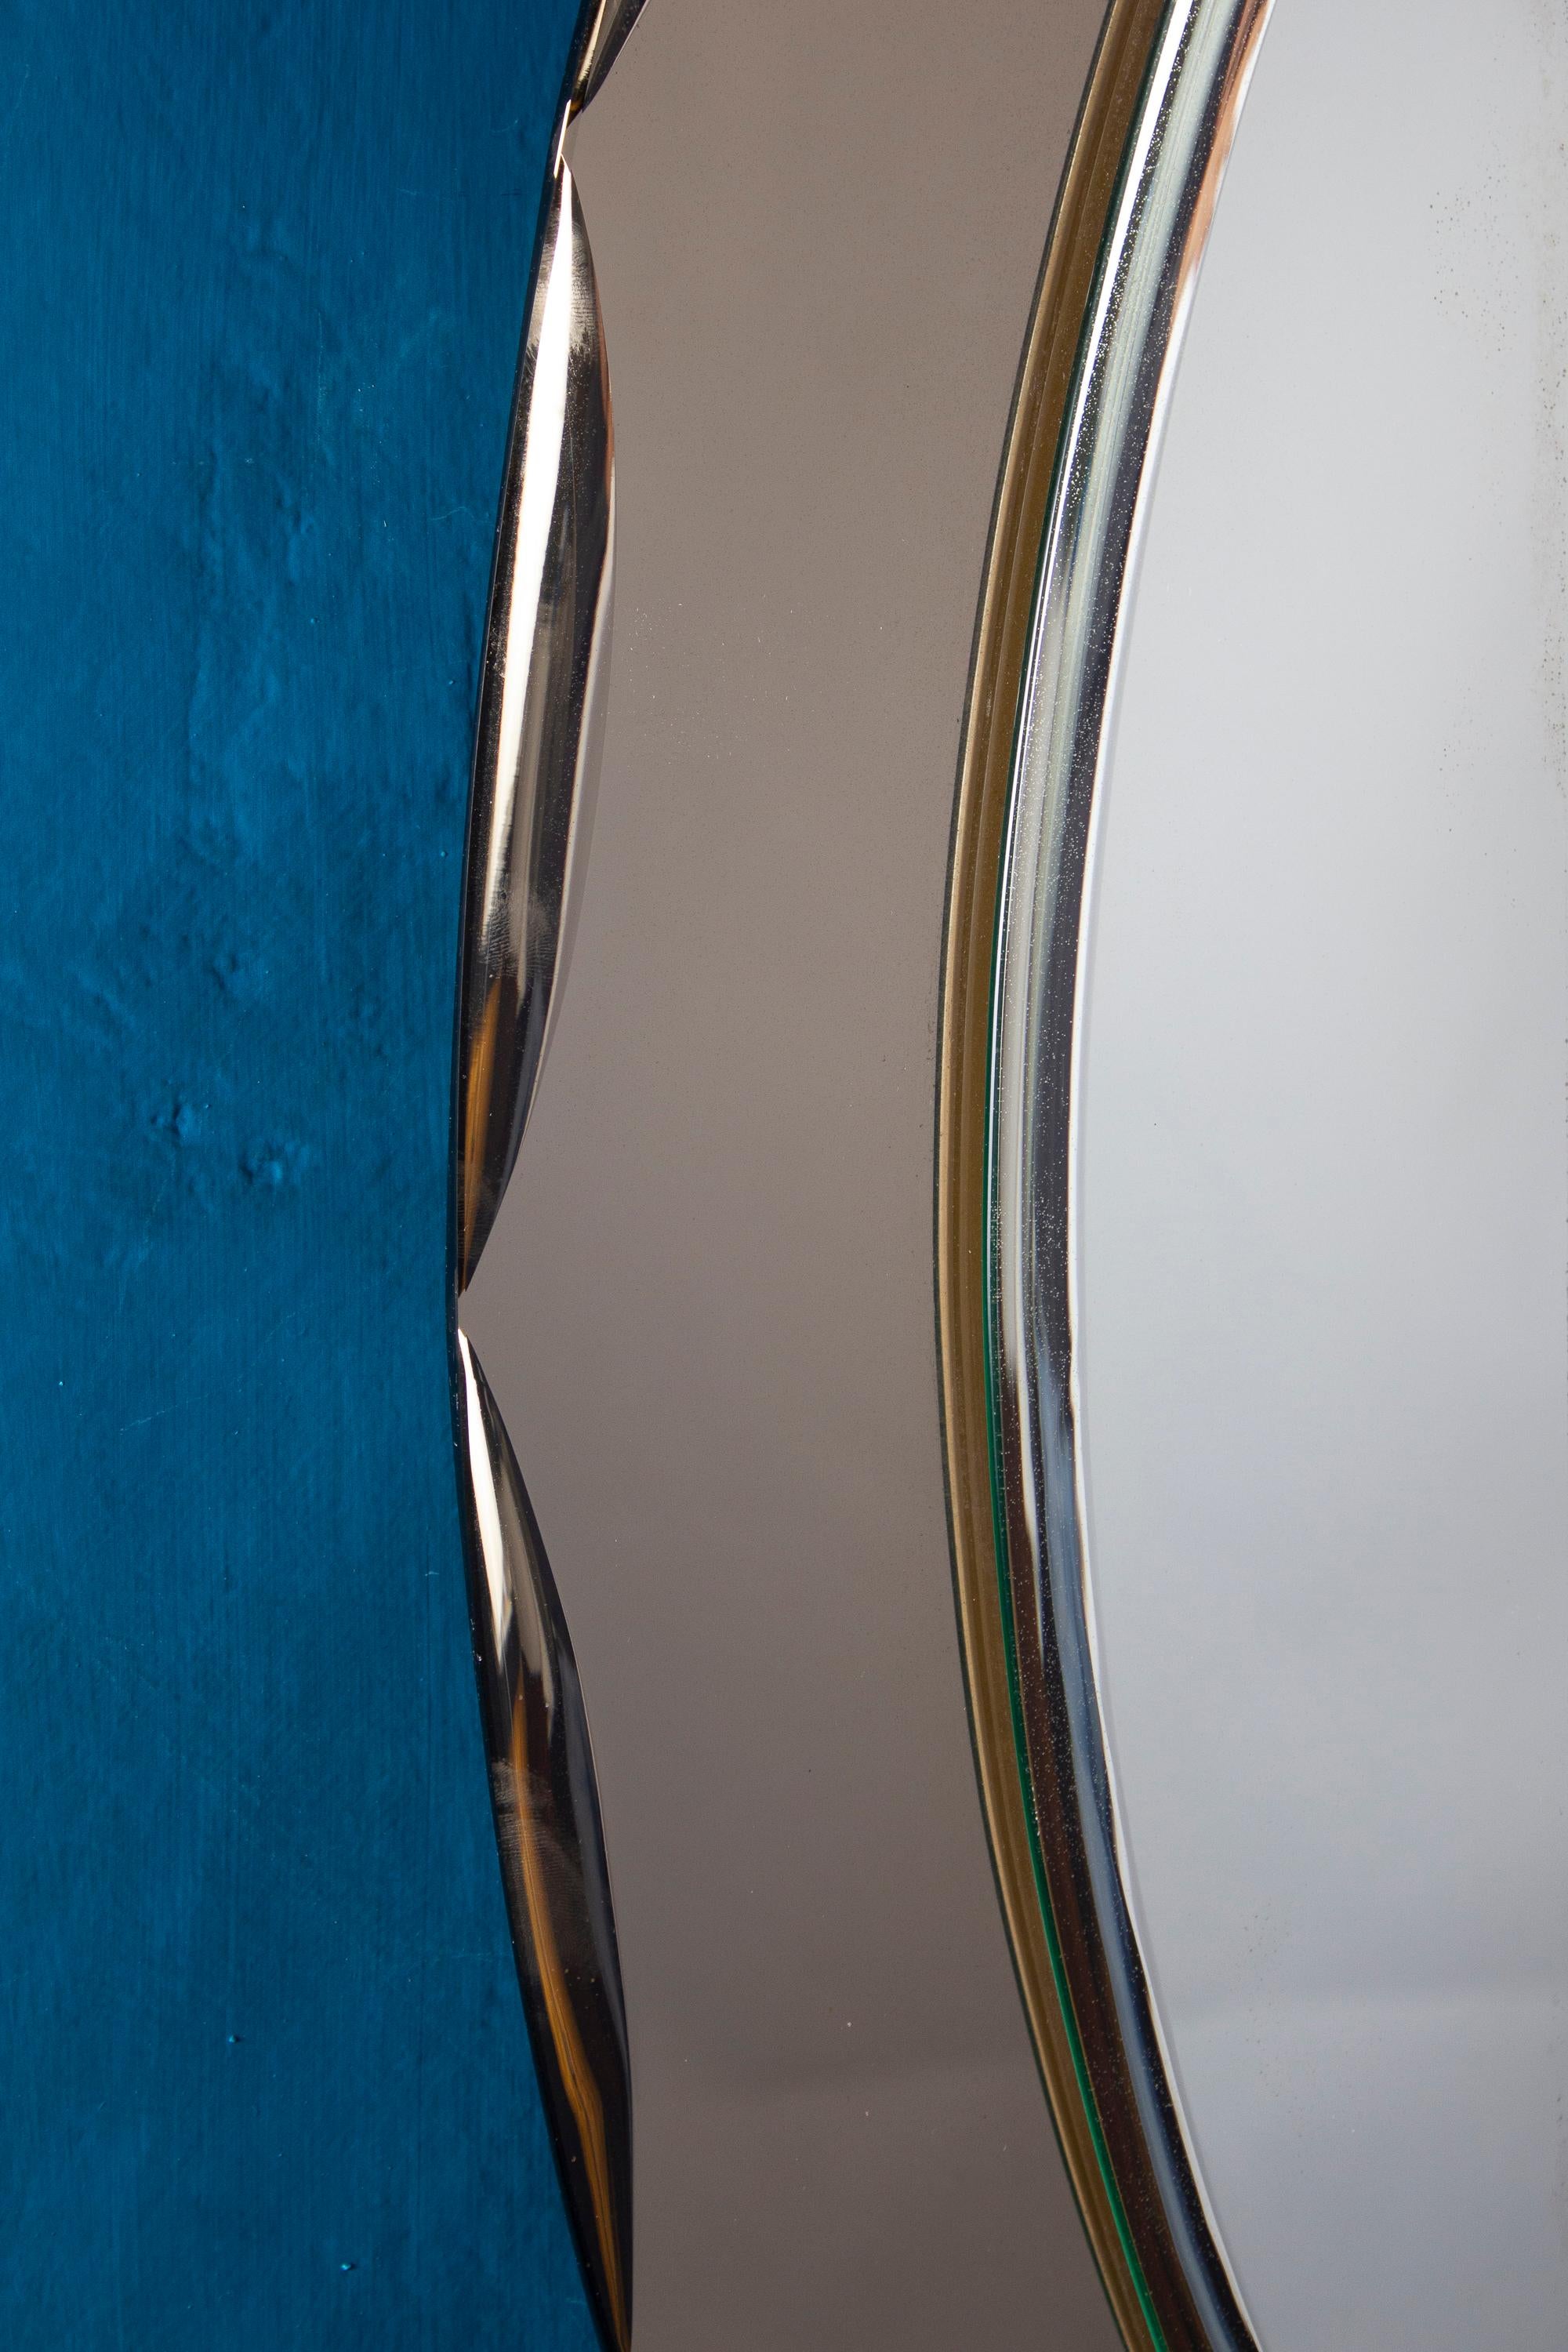 Mid-Century Modern Italian Mirror in the Style of Fontana Arte, 1970s For Sale